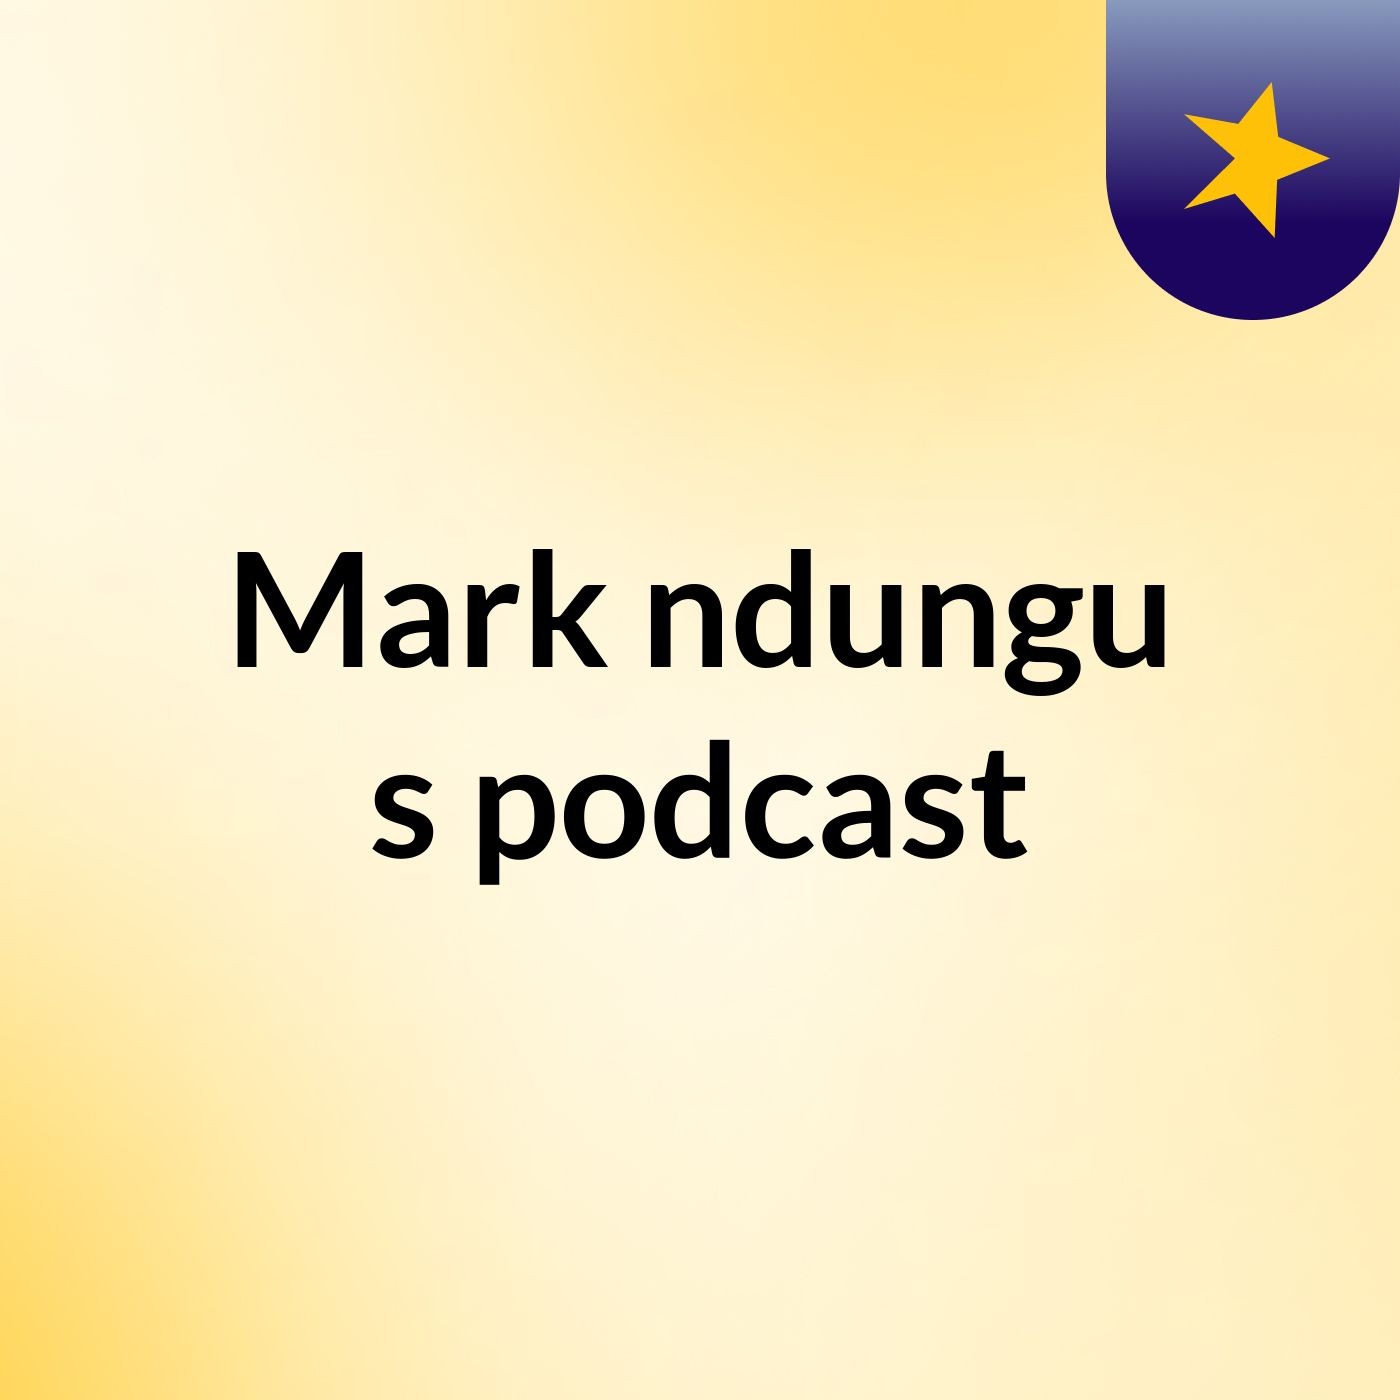 Episode 4 - Mark ndungu's podcast